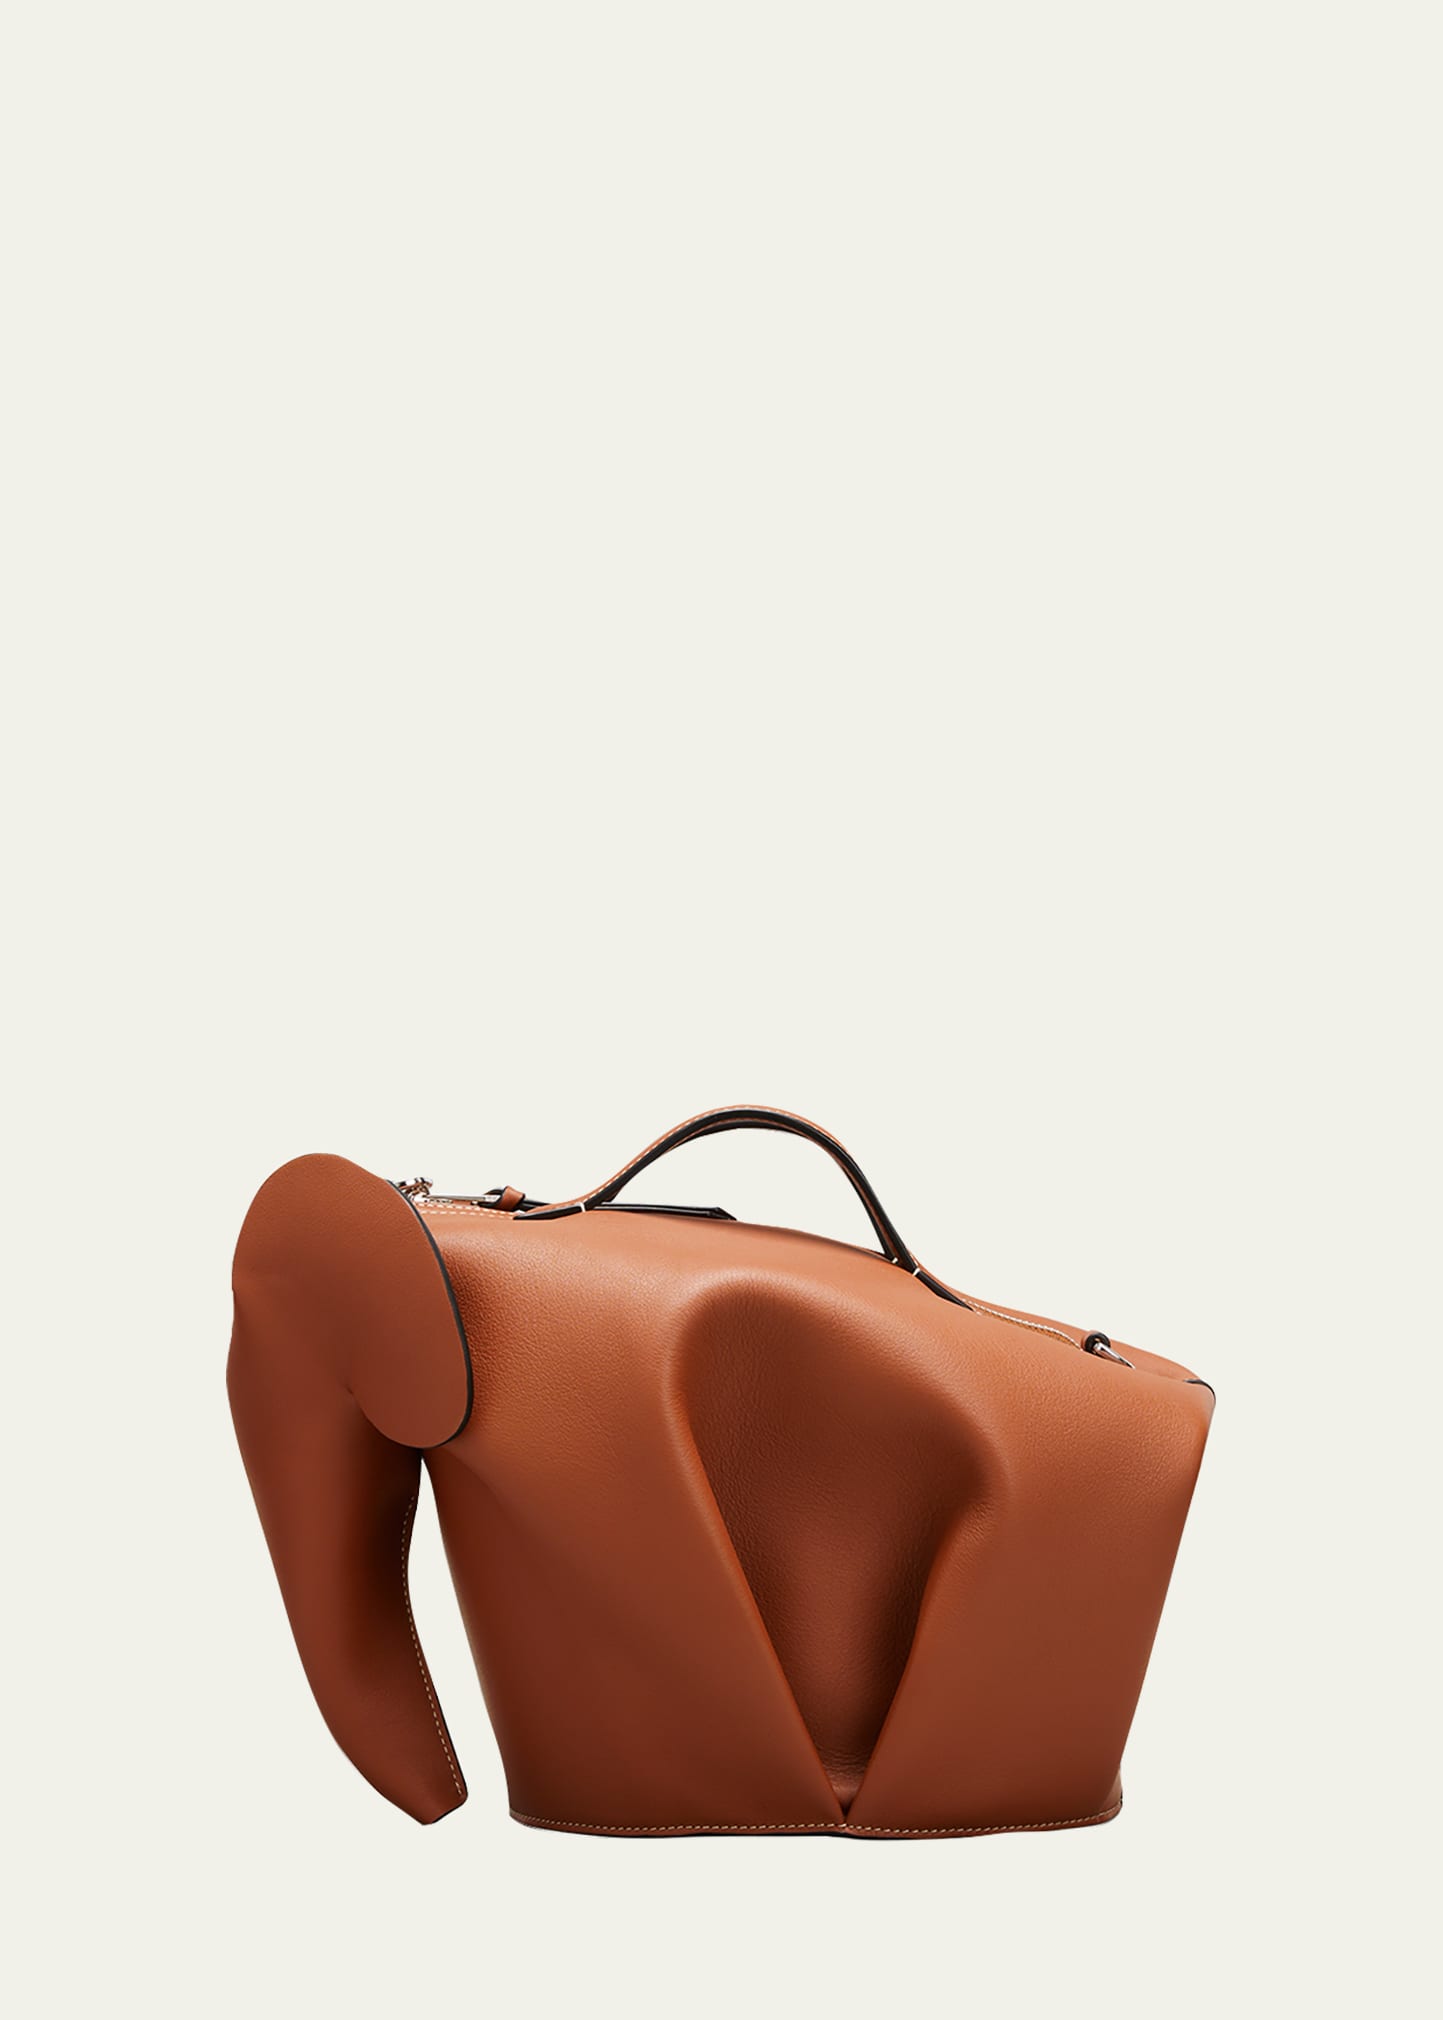 Loewe Women's Large Leather Elephant Bag - Tan